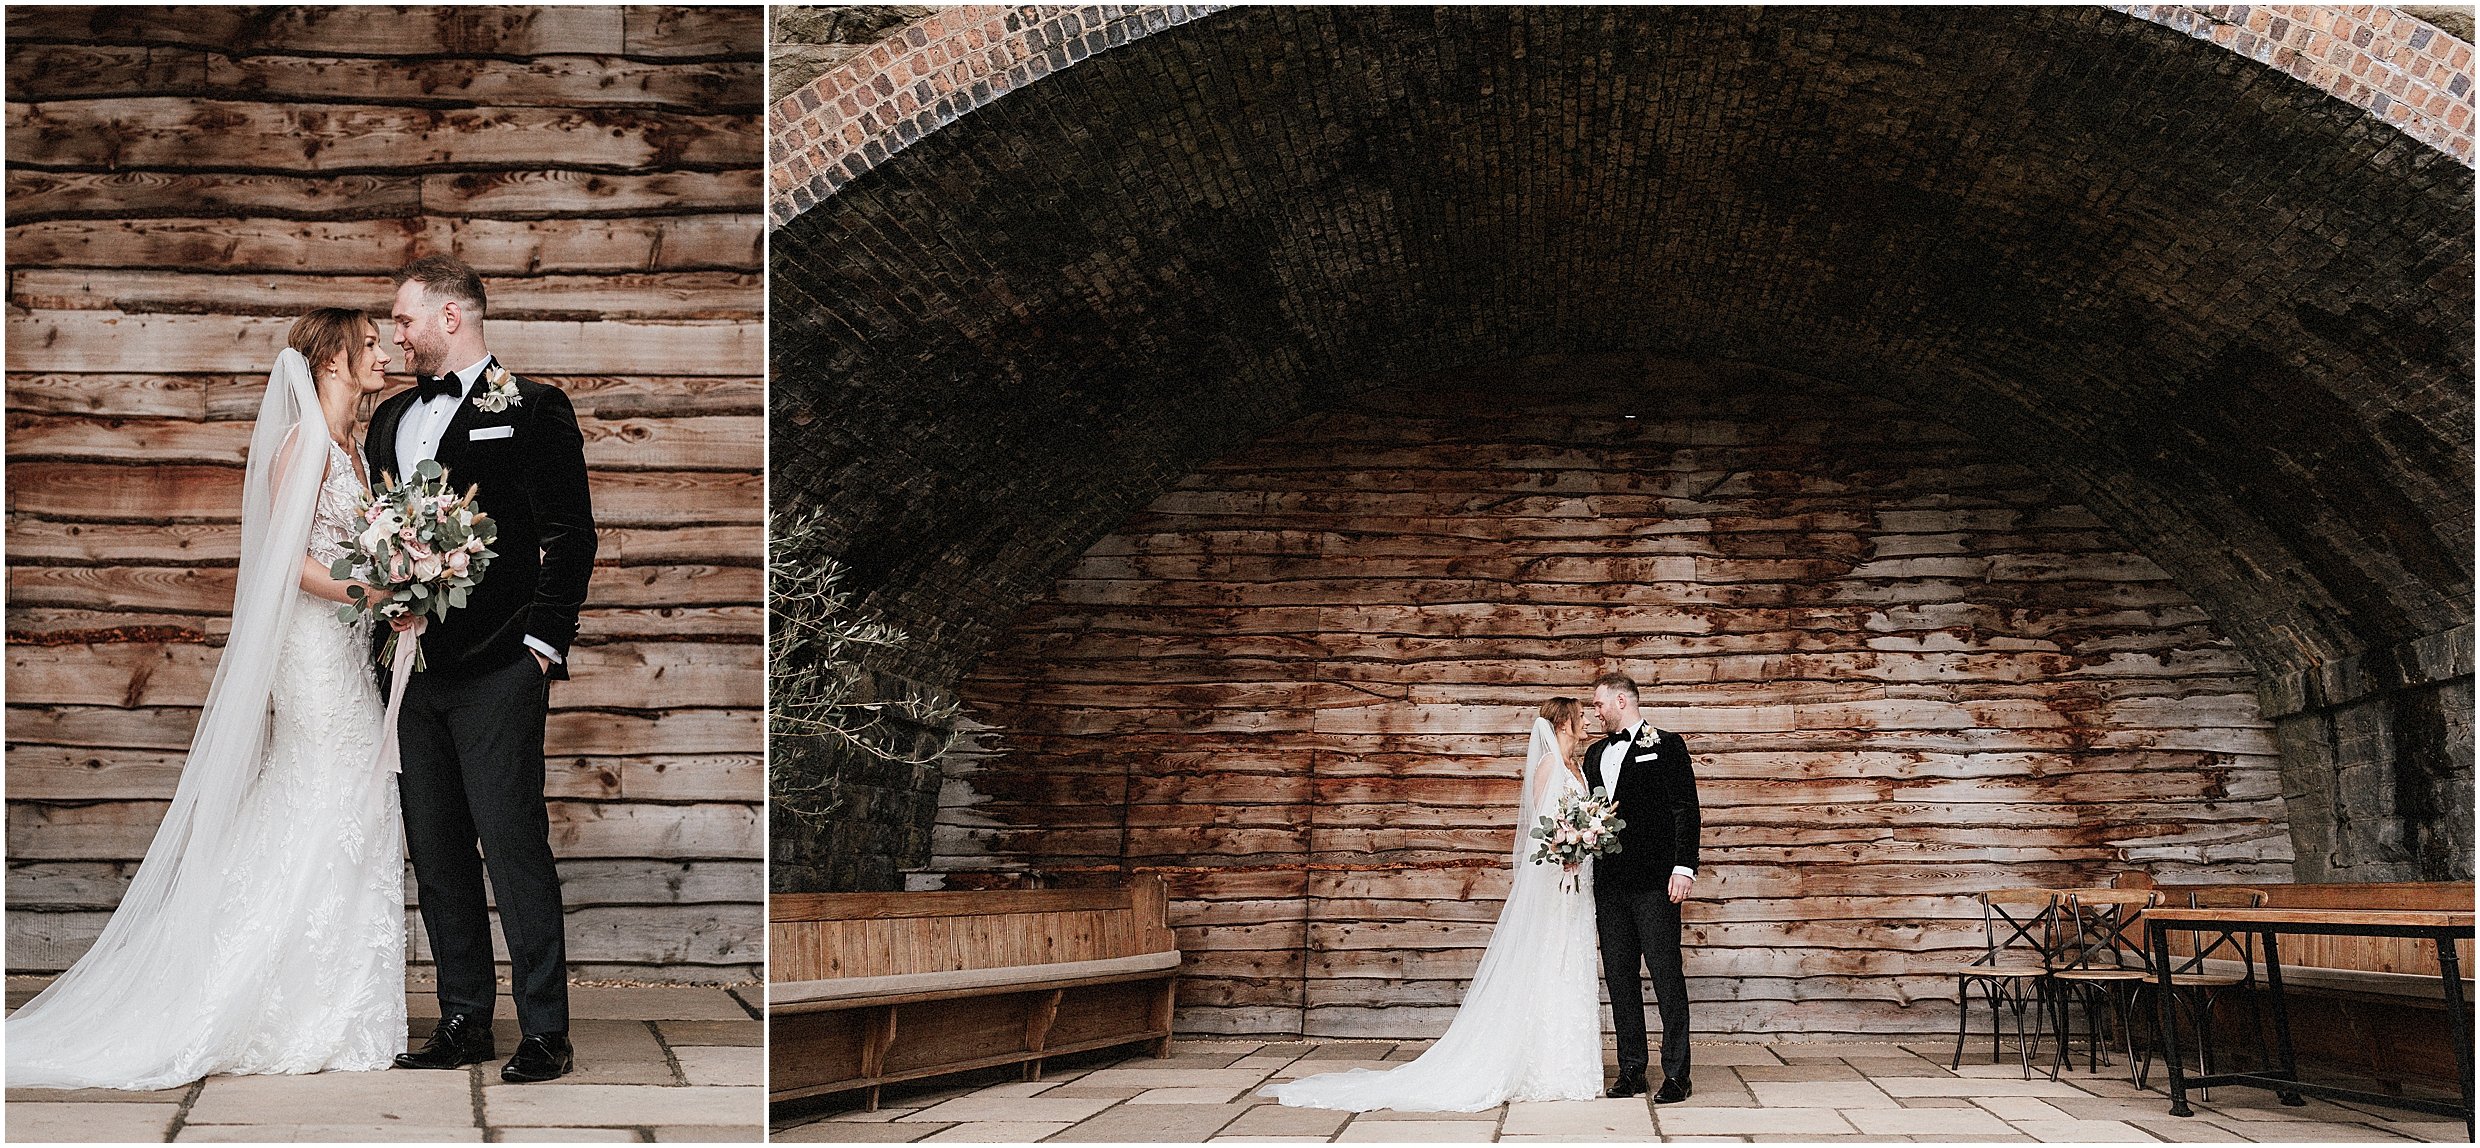 Tower Hill Barns Wedding Photography